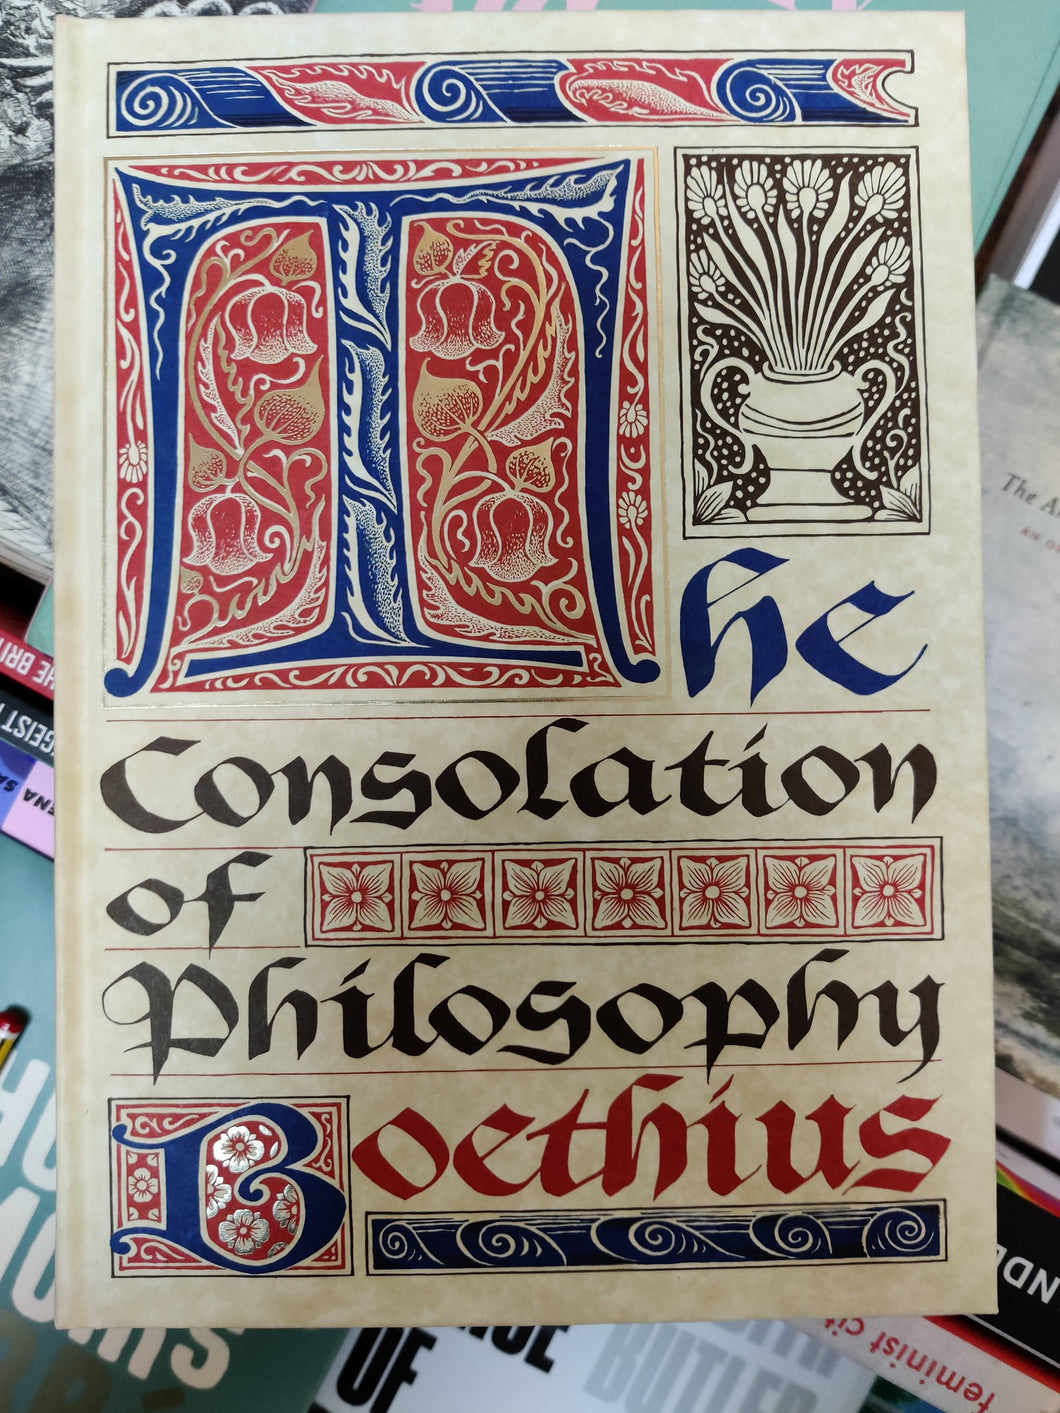 Boethius: The Consolation of Philosophy (Folio)